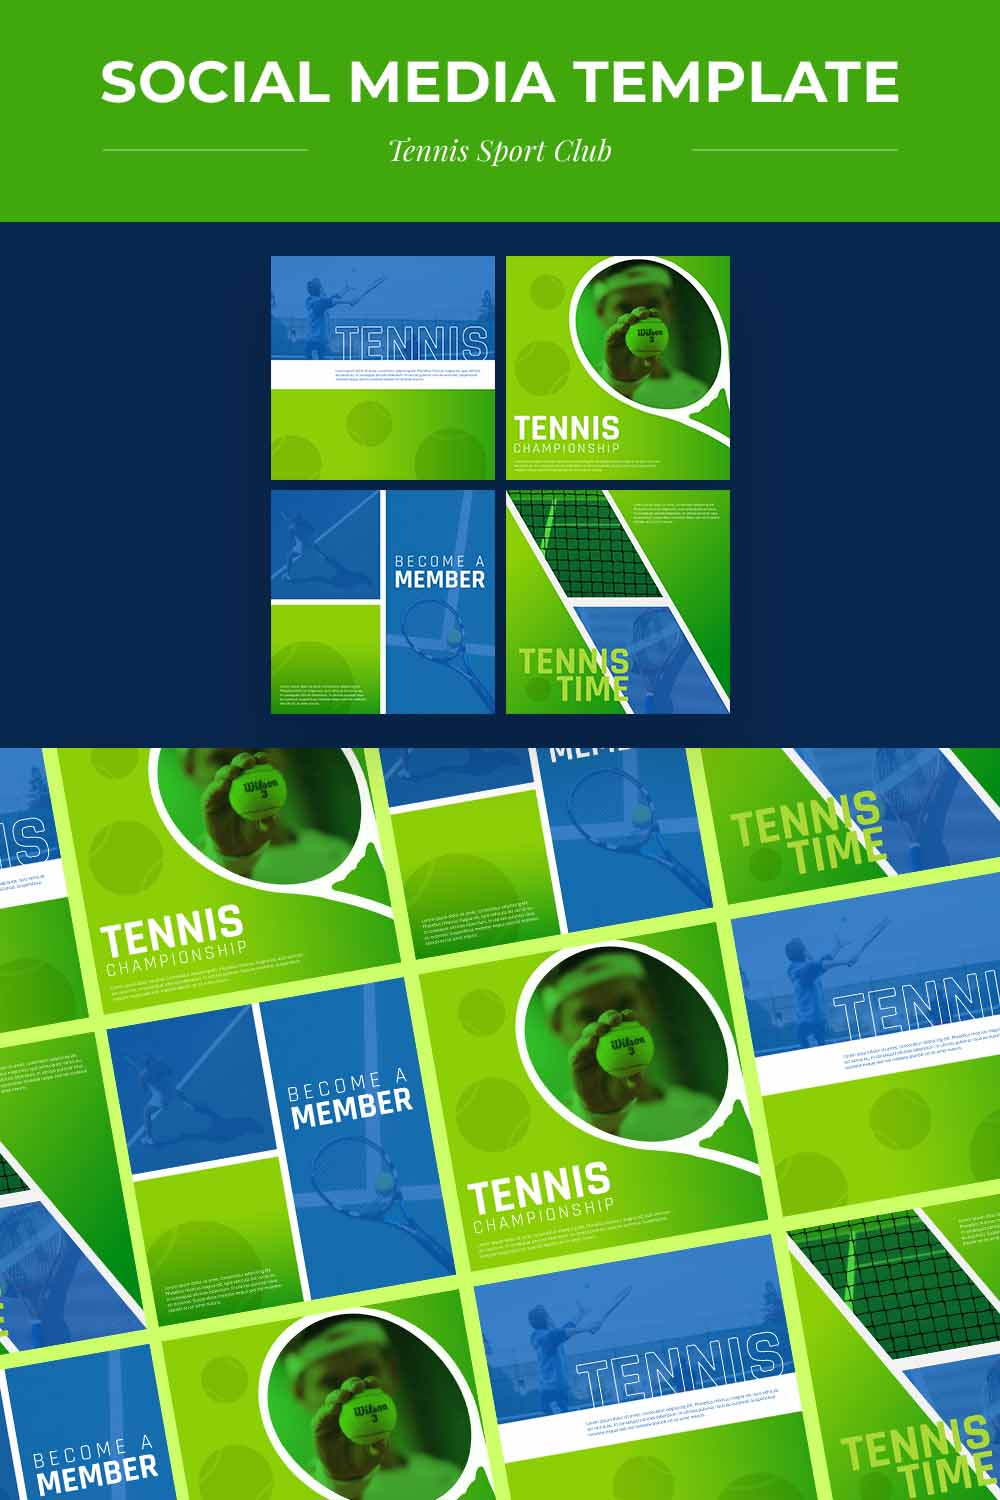 Tennis Sport Club Social Media Banner Template pinterest image.